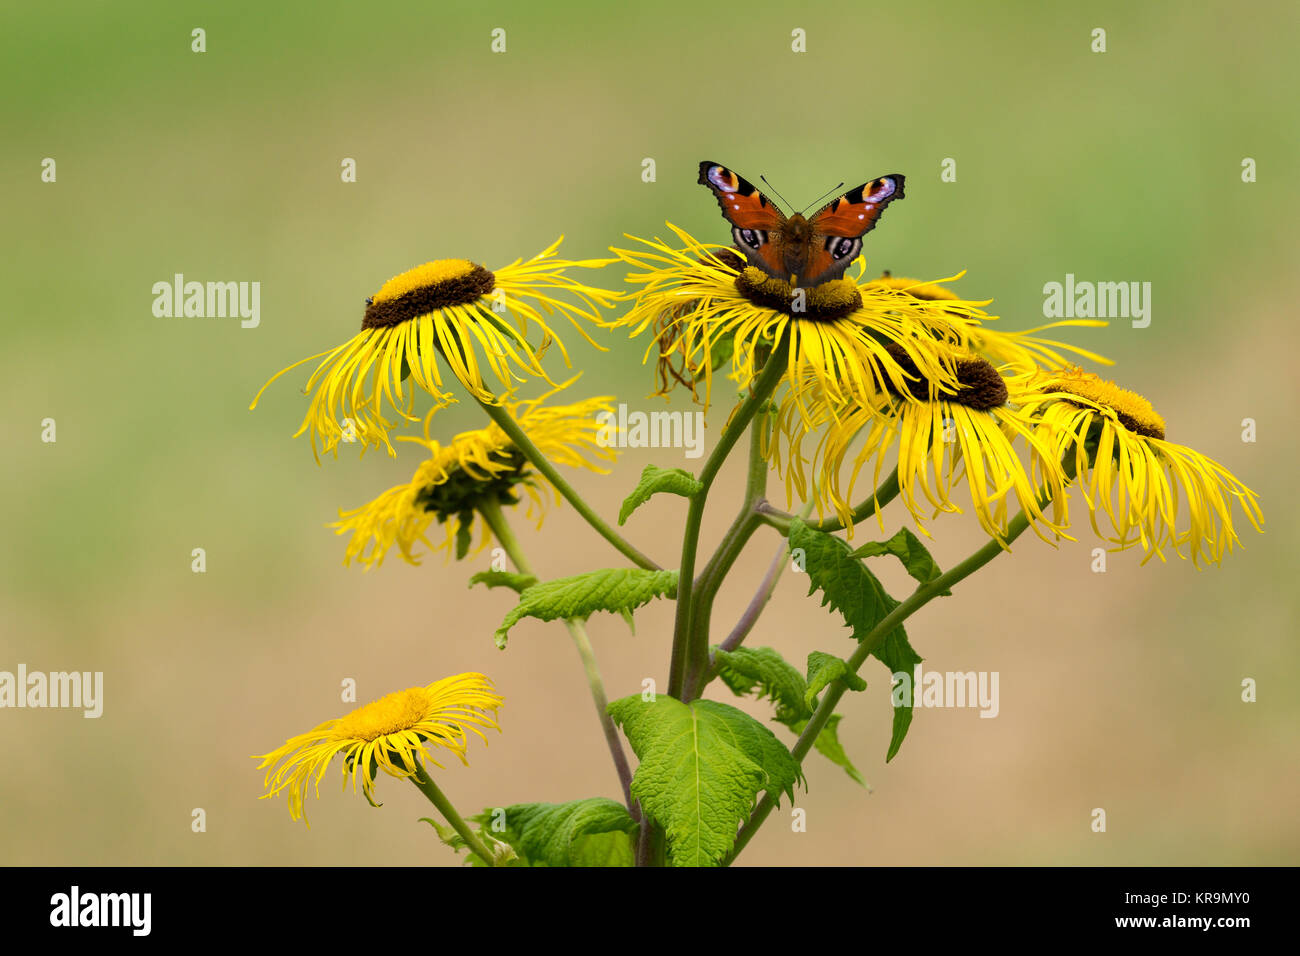 Tagpfauenauge, Alant, Blume, Schmetterling, Falter, Augen, Garten, Blüten Banque D'Images